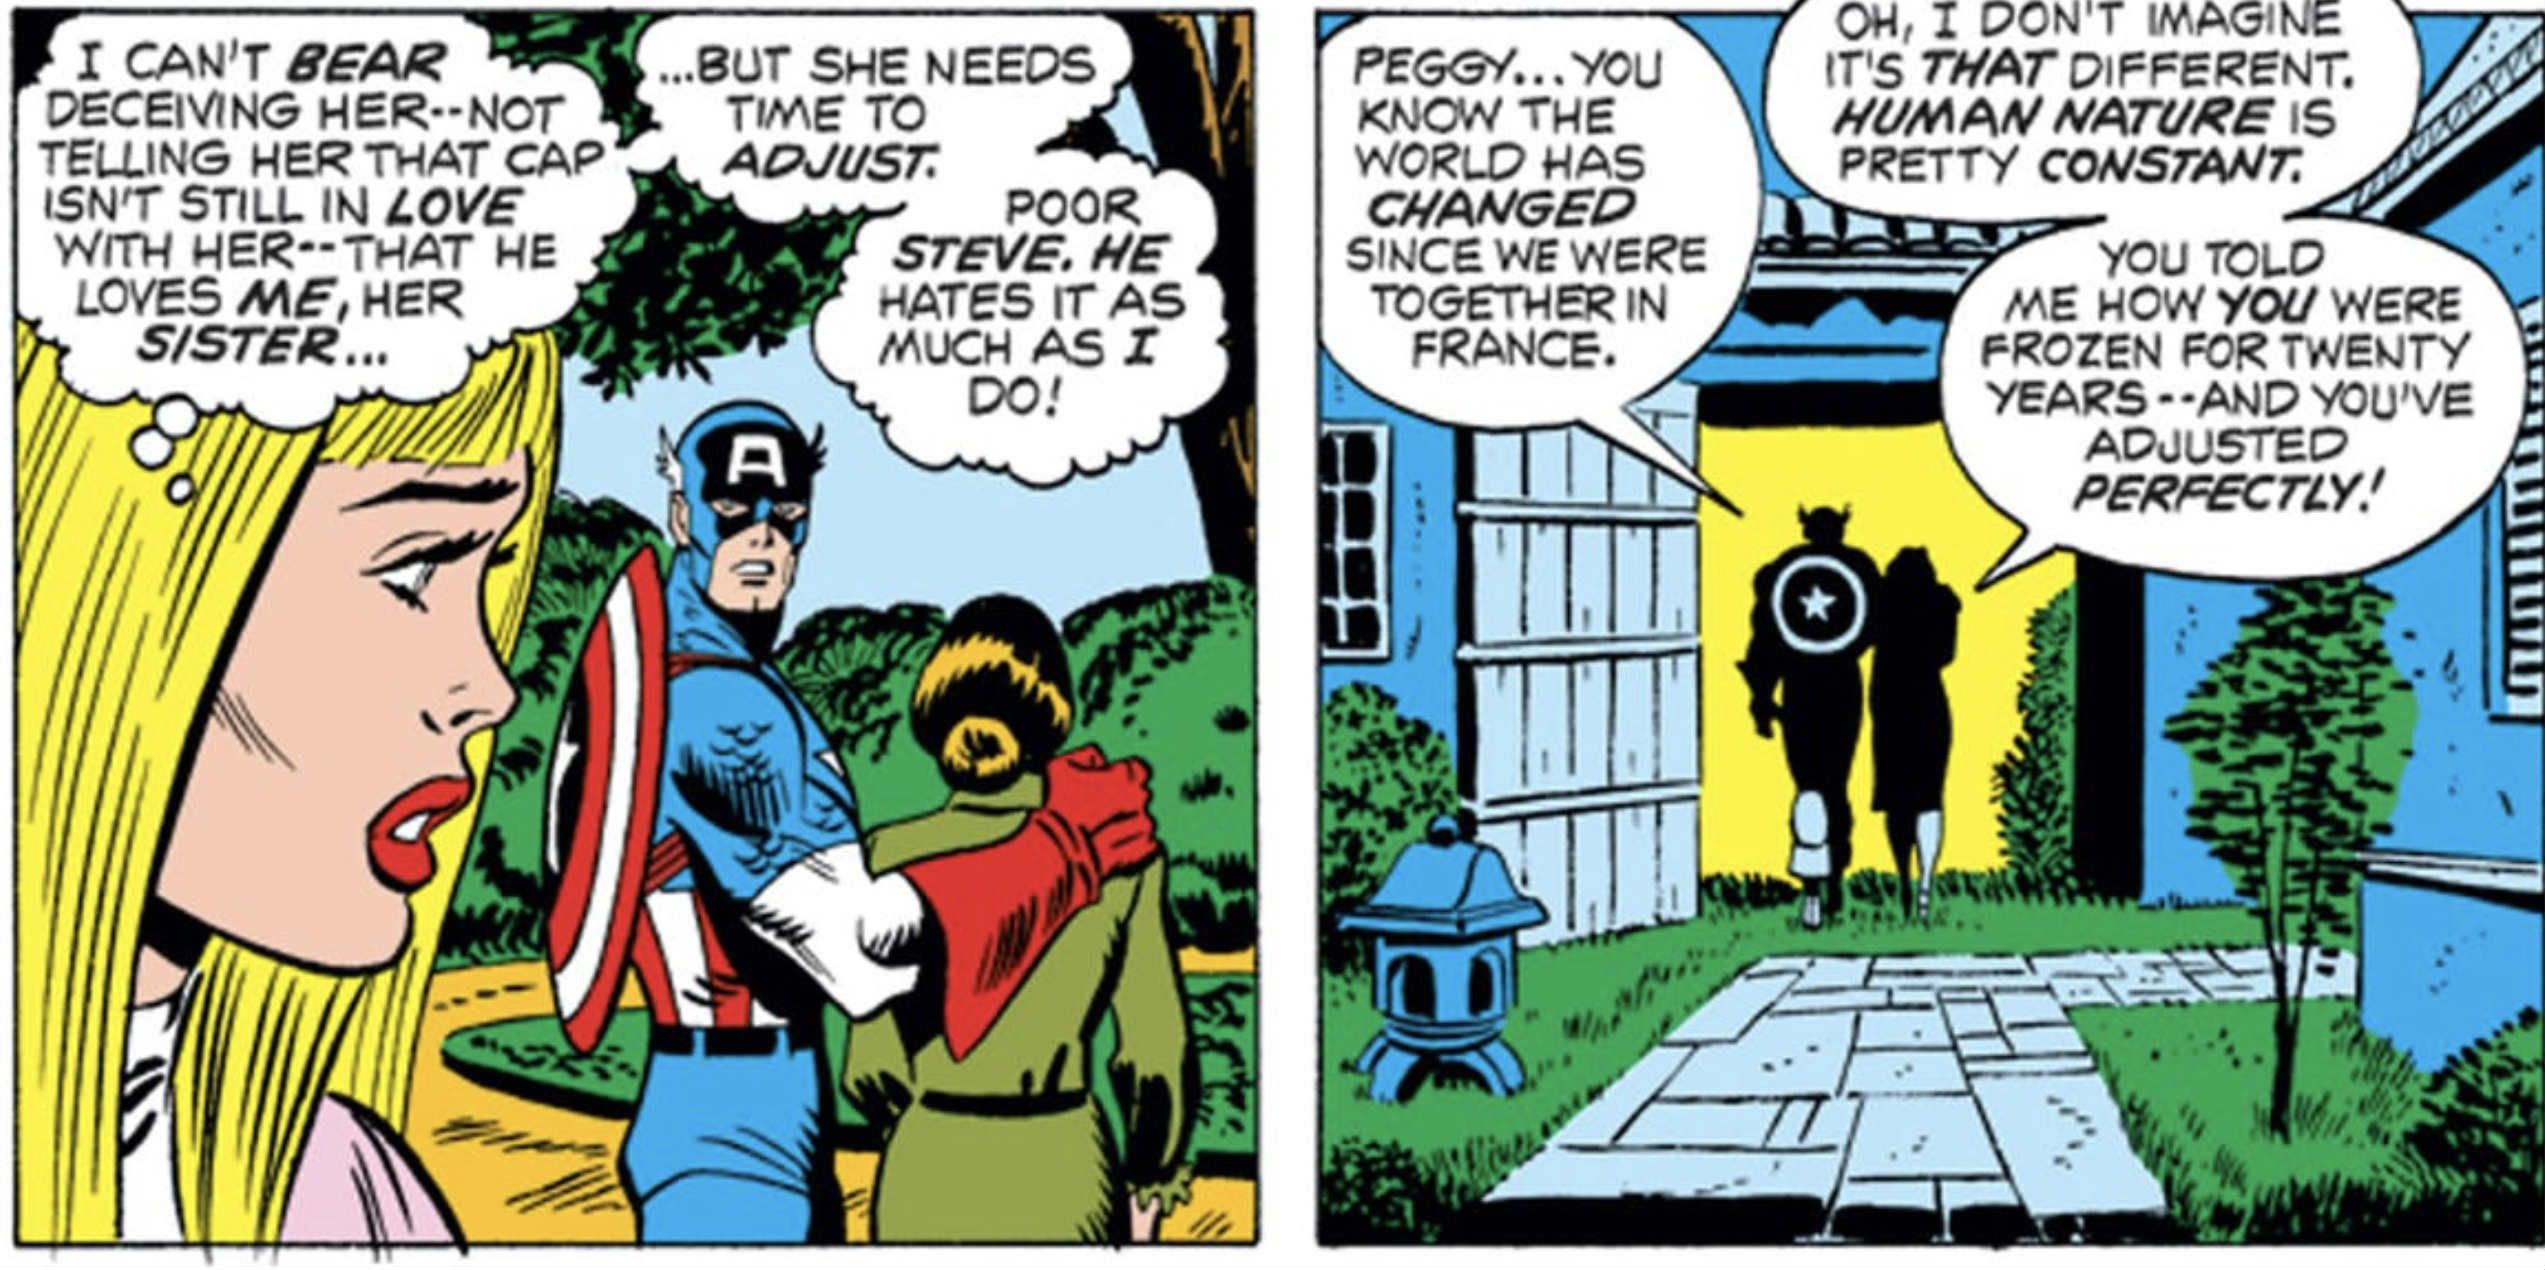 Captain America - Marvel Comics